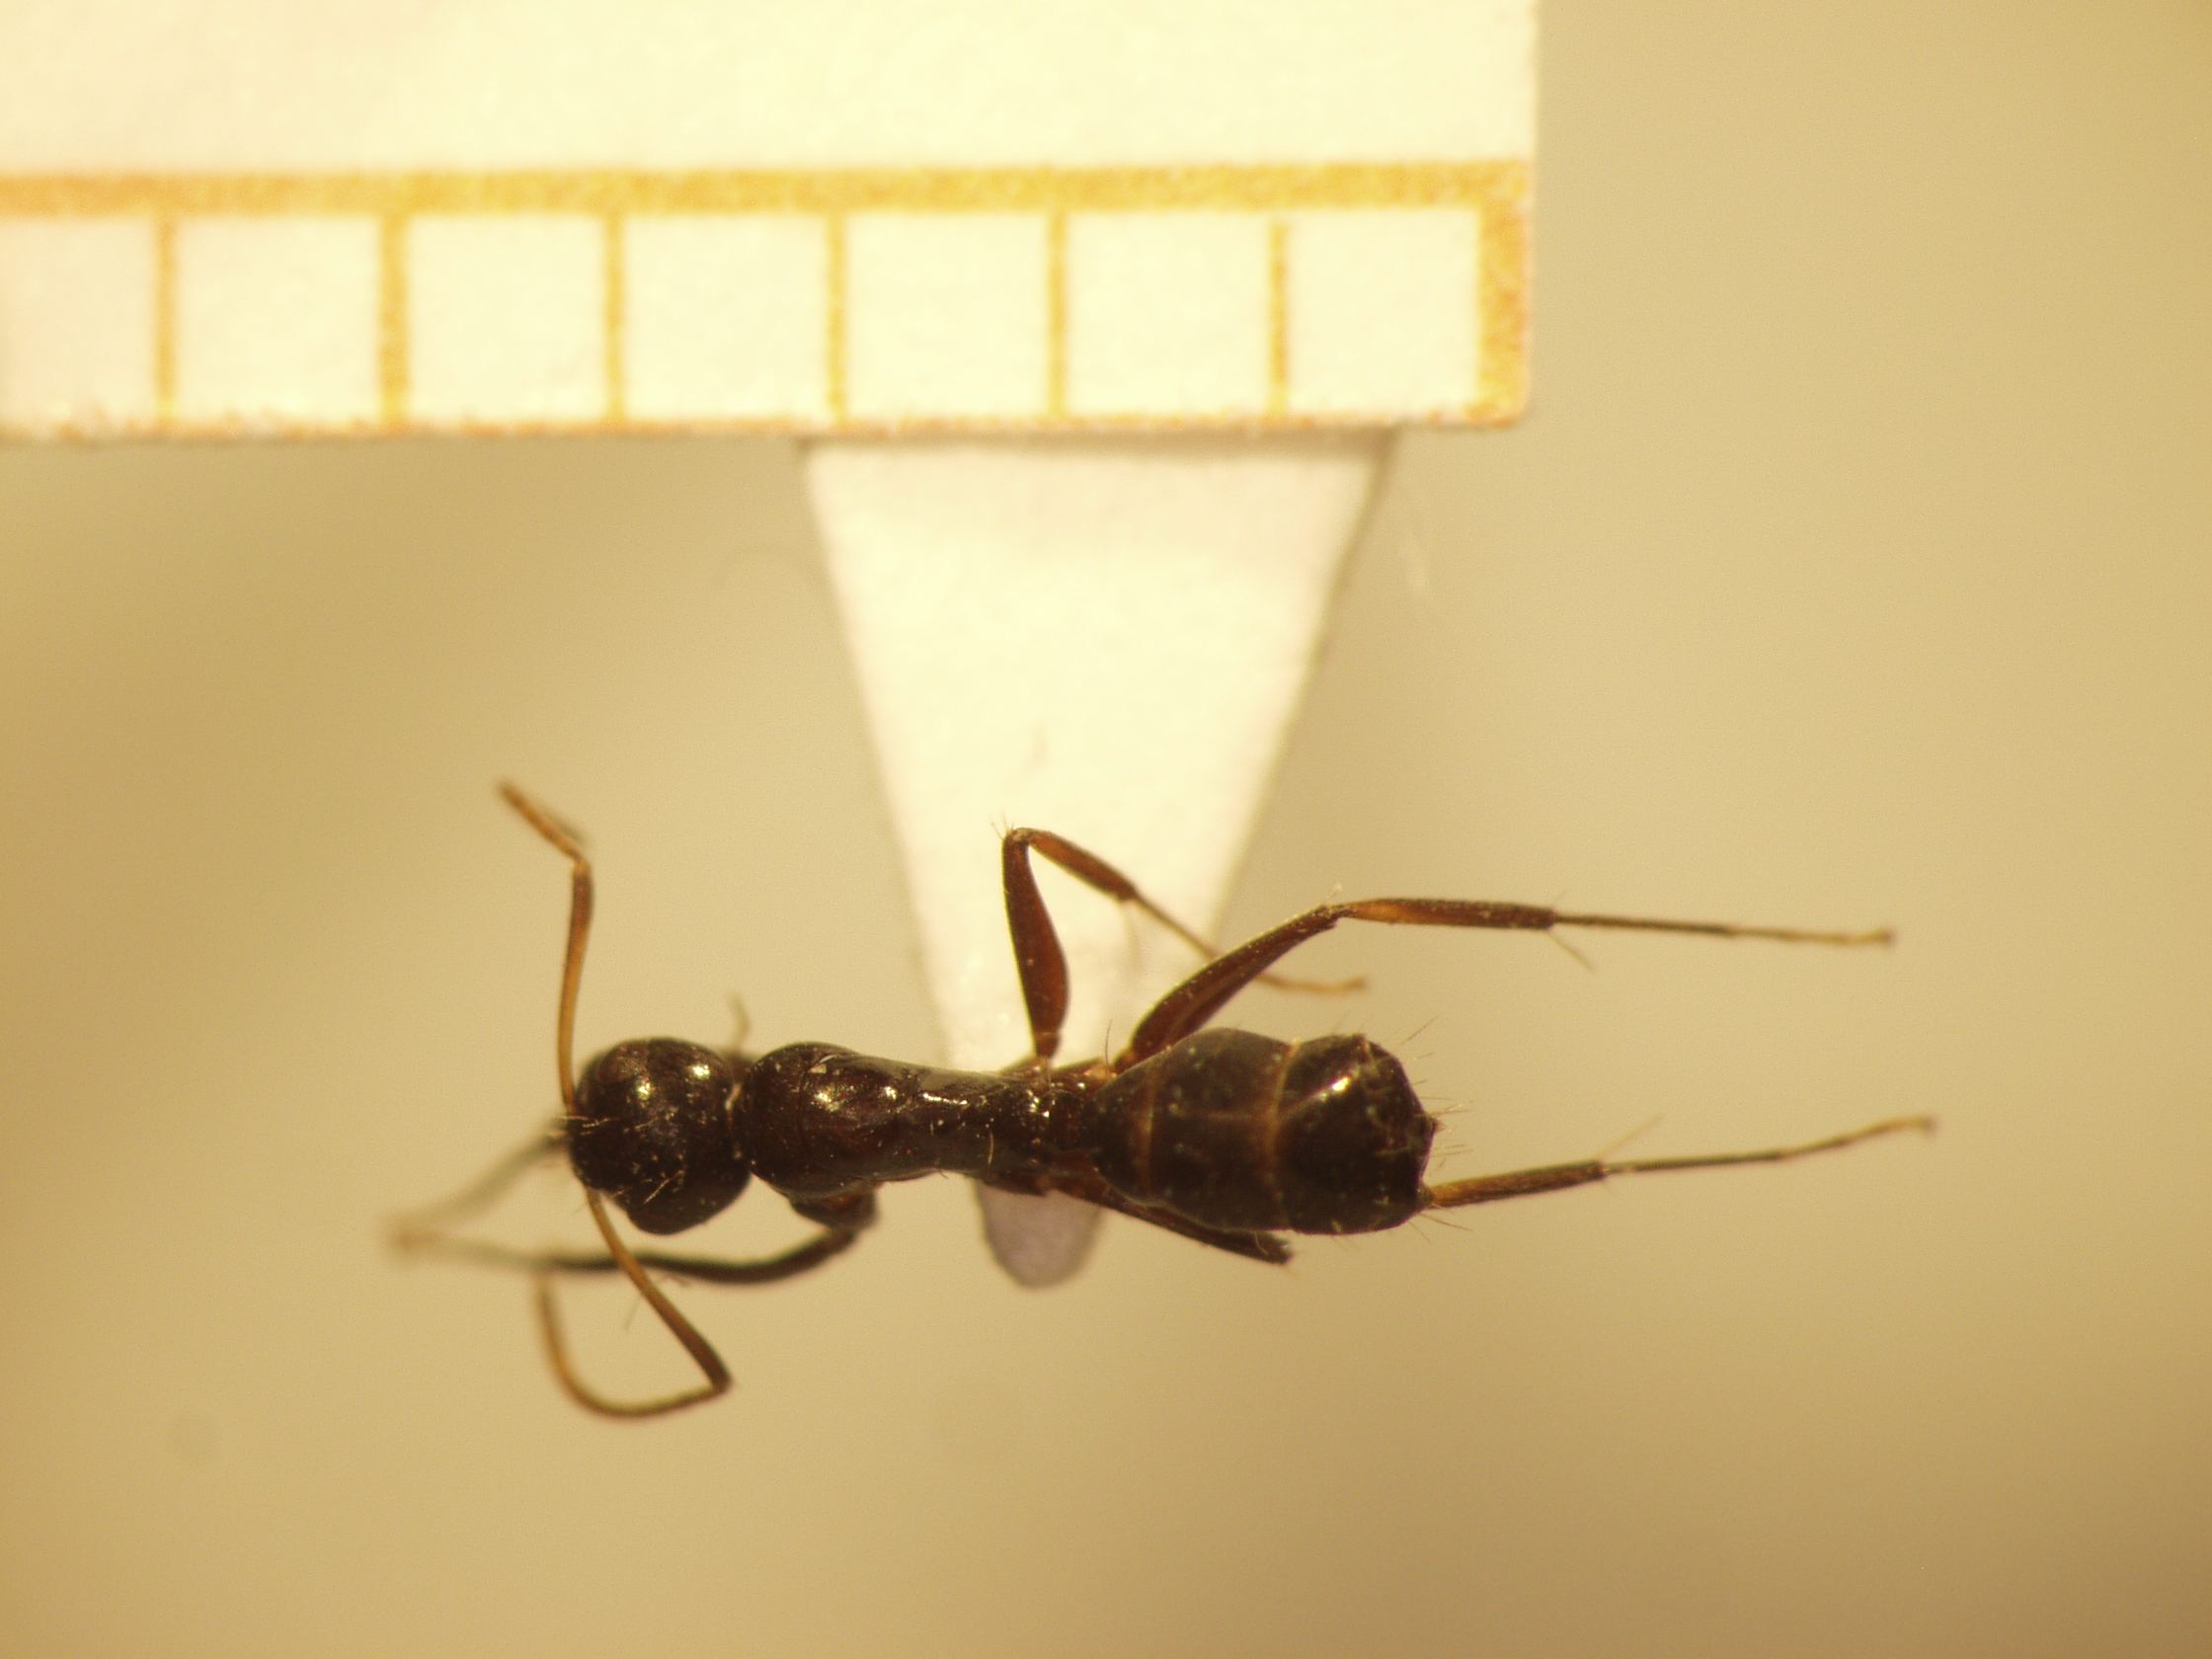 Camponotus 14 dorsal